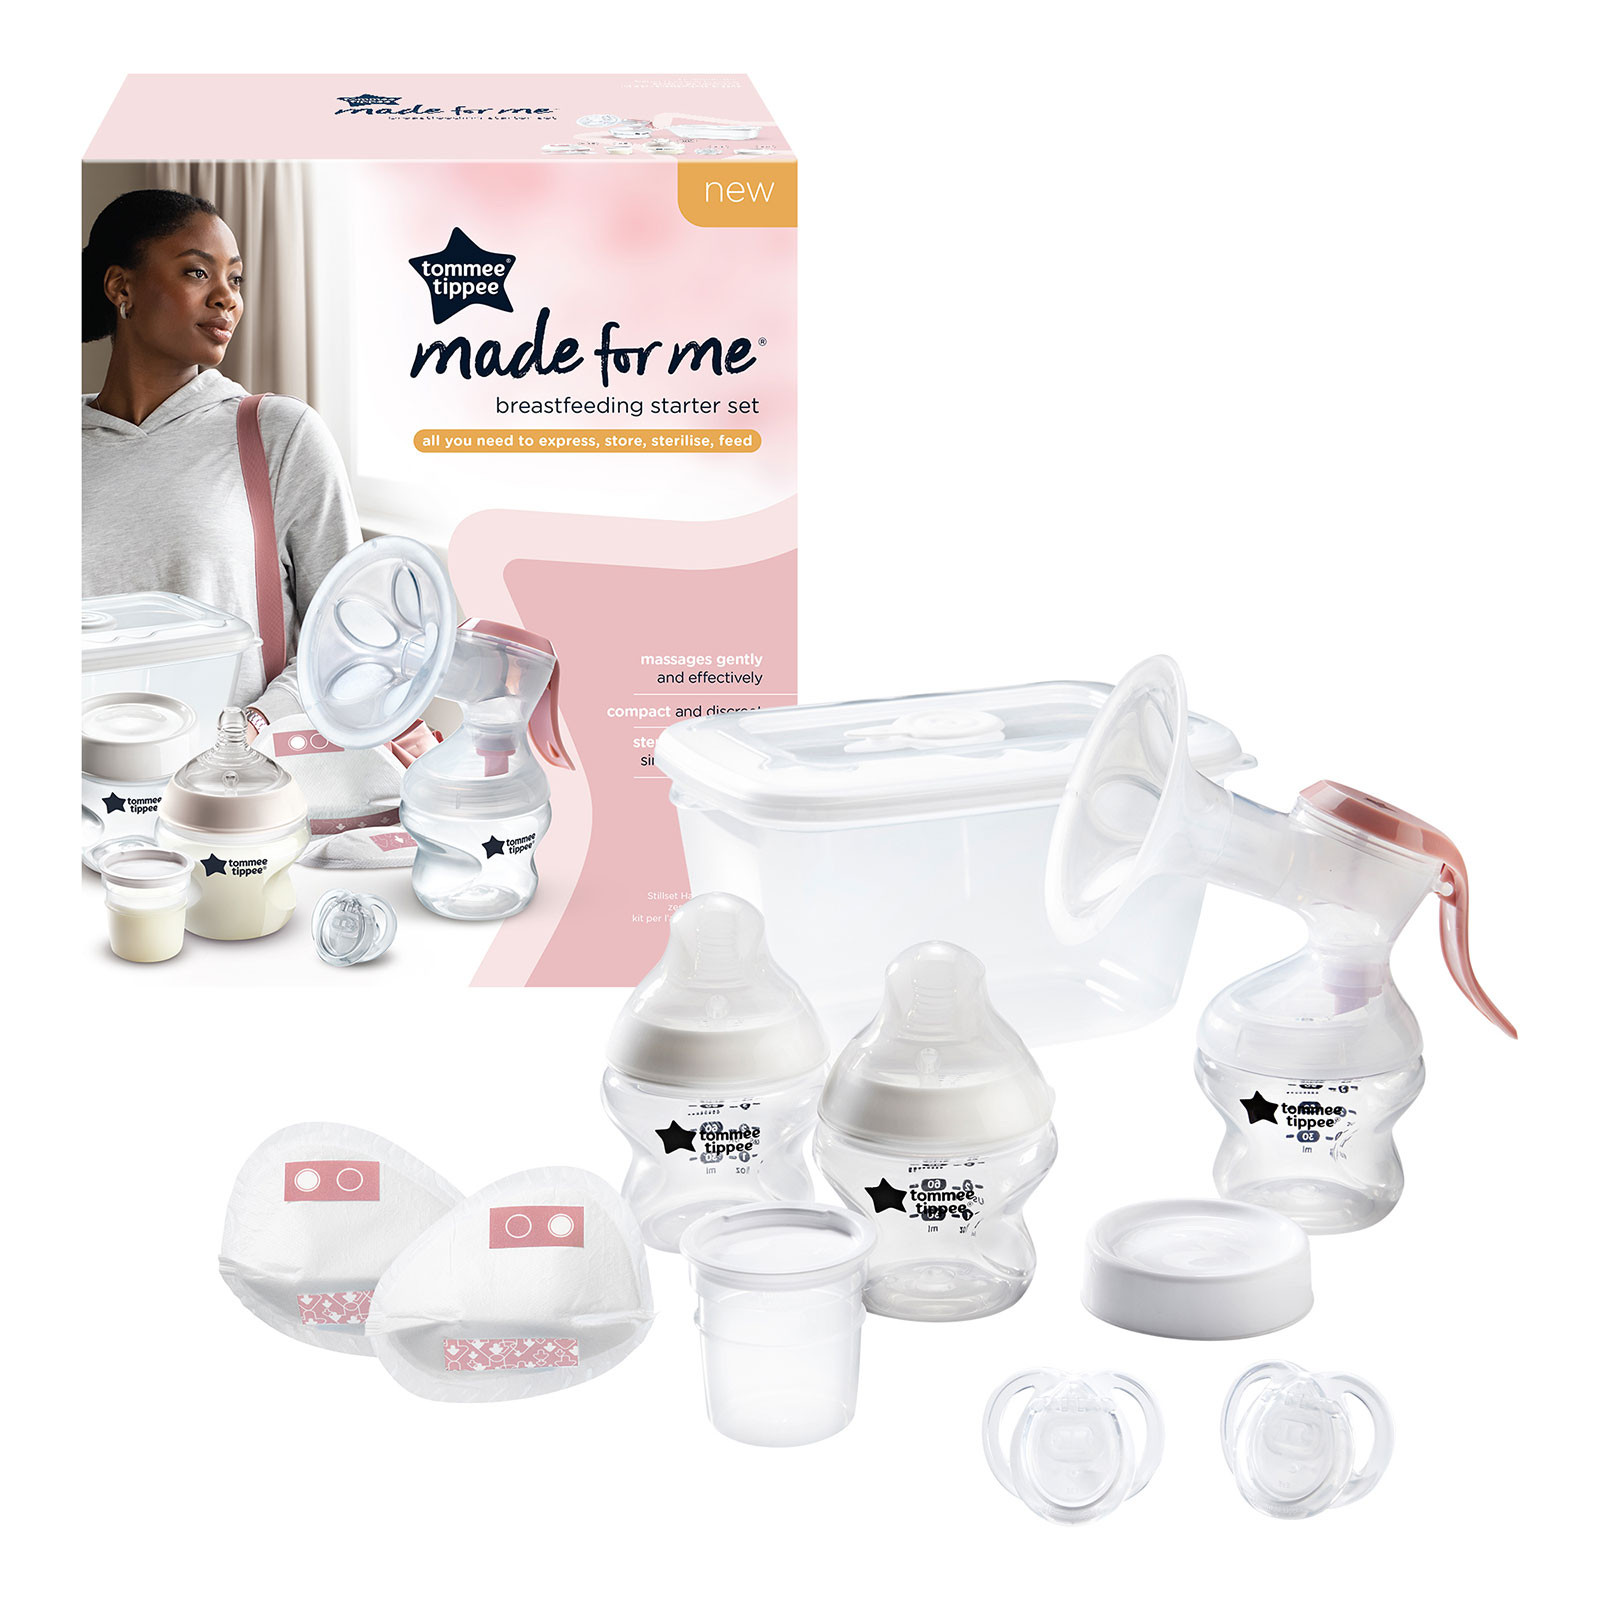 Tomme Tippee Breastfeeding Starter Kit